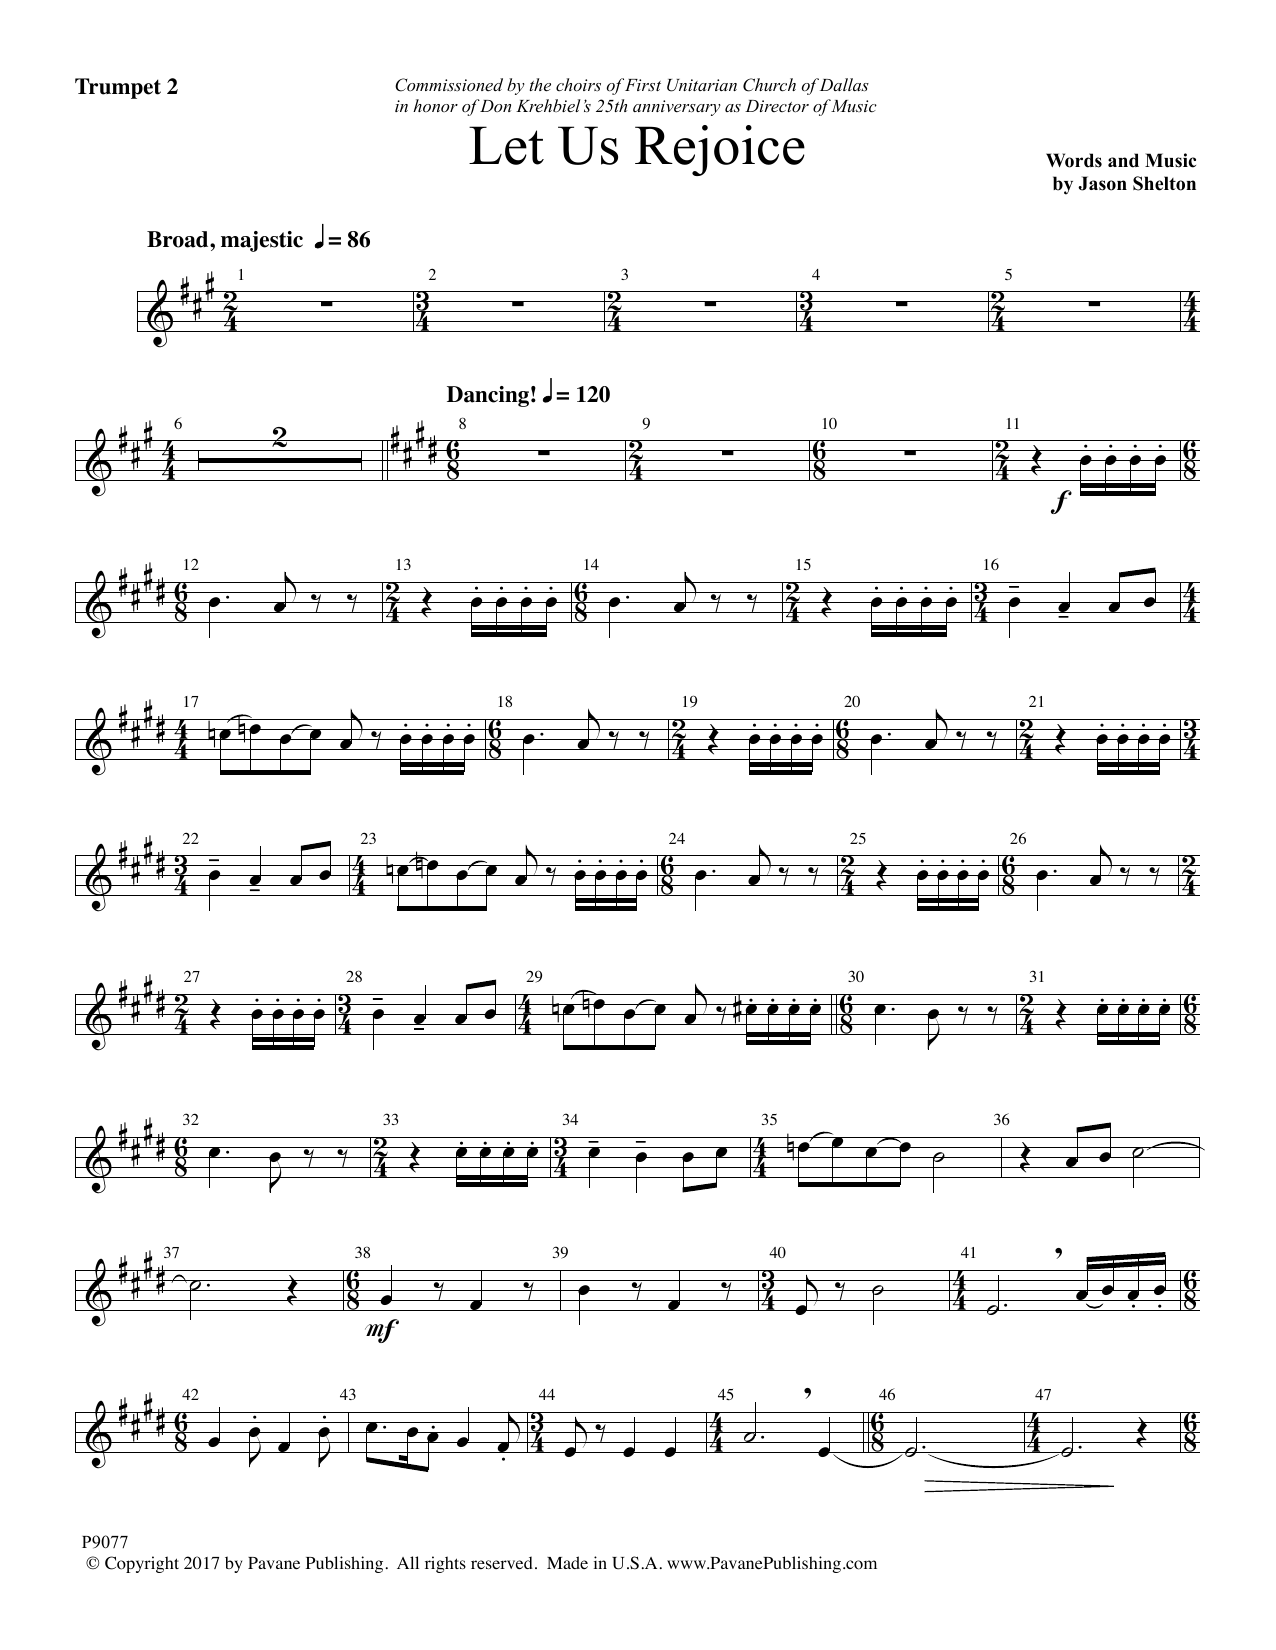 Jason Shelton To This Day - Trumpet 2 in Bb Sheet Music Notes & Chords for Choir Instrumental Pak - Download or Print PDF